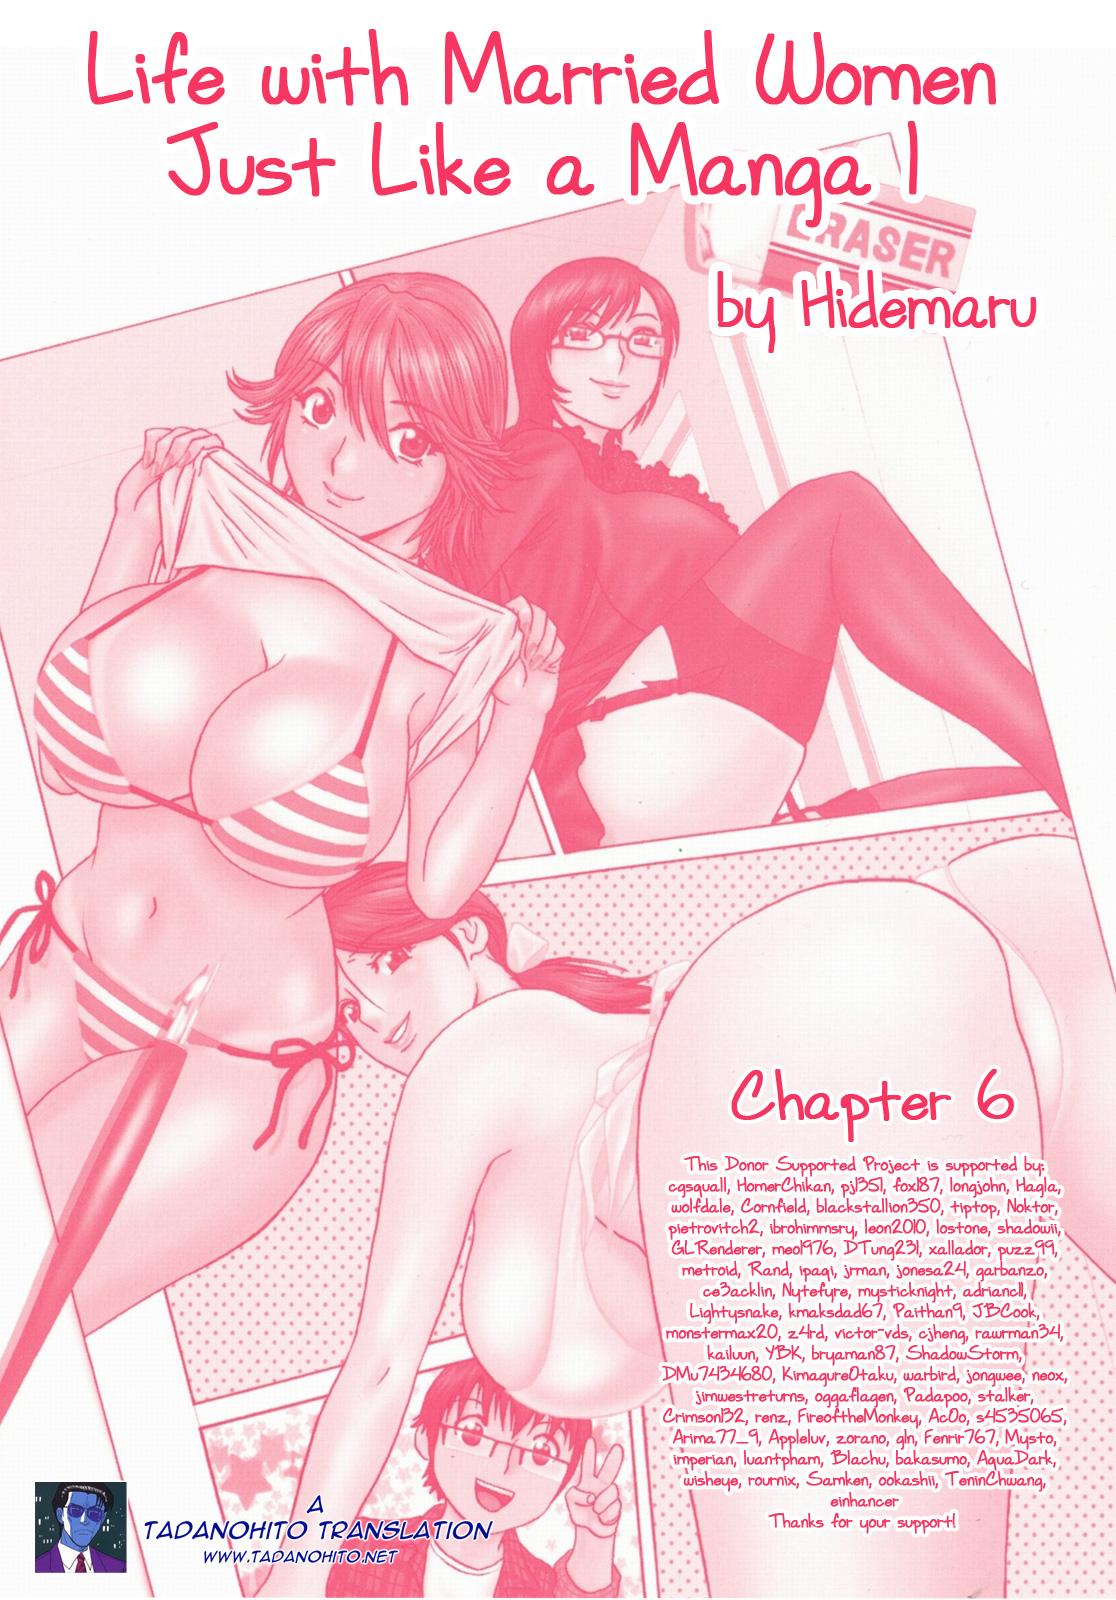 [Hidemaru] Life with Married Women Just Like a Manga 1 - Ch. 1-7 [English] {Tadanohito} 122